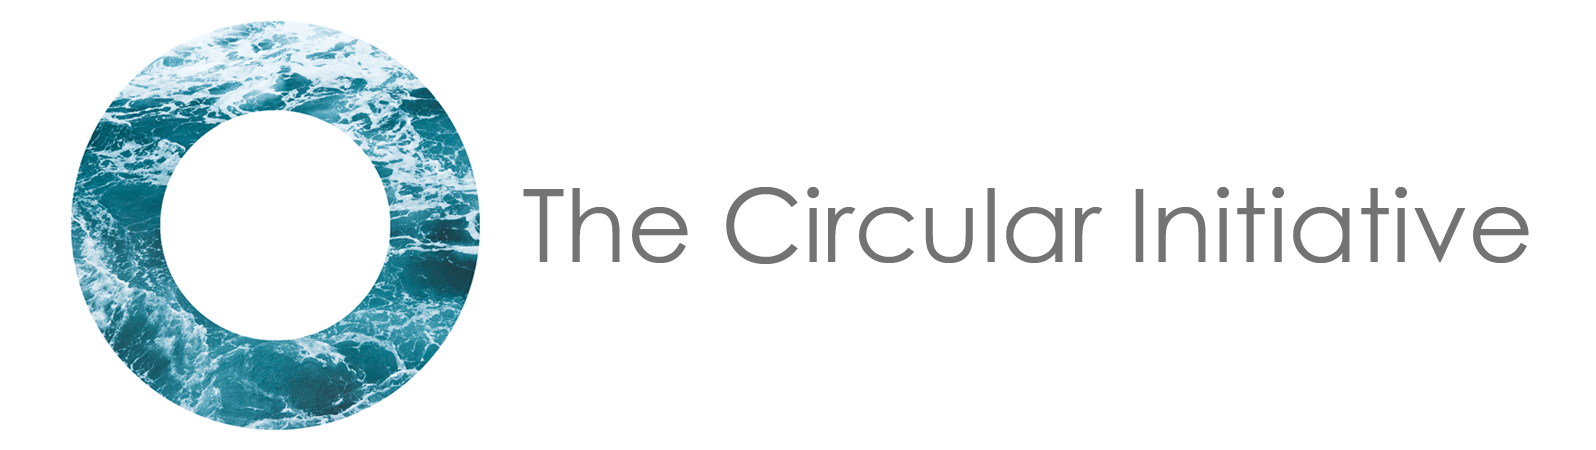 The Circular Initiative Logo